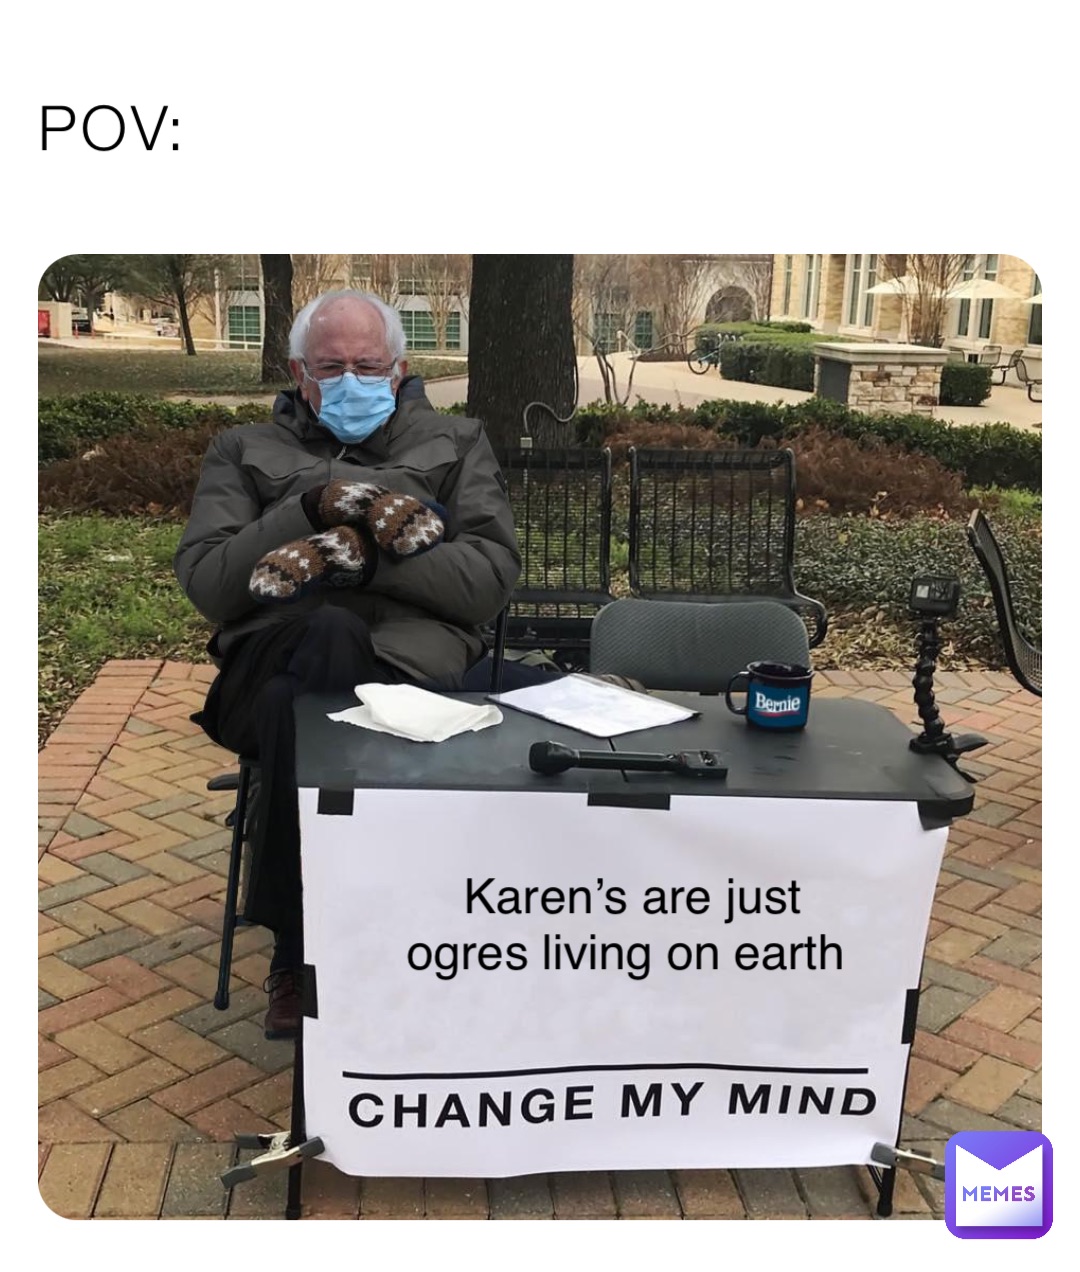 POV: Karen’s are just ogres living on earth